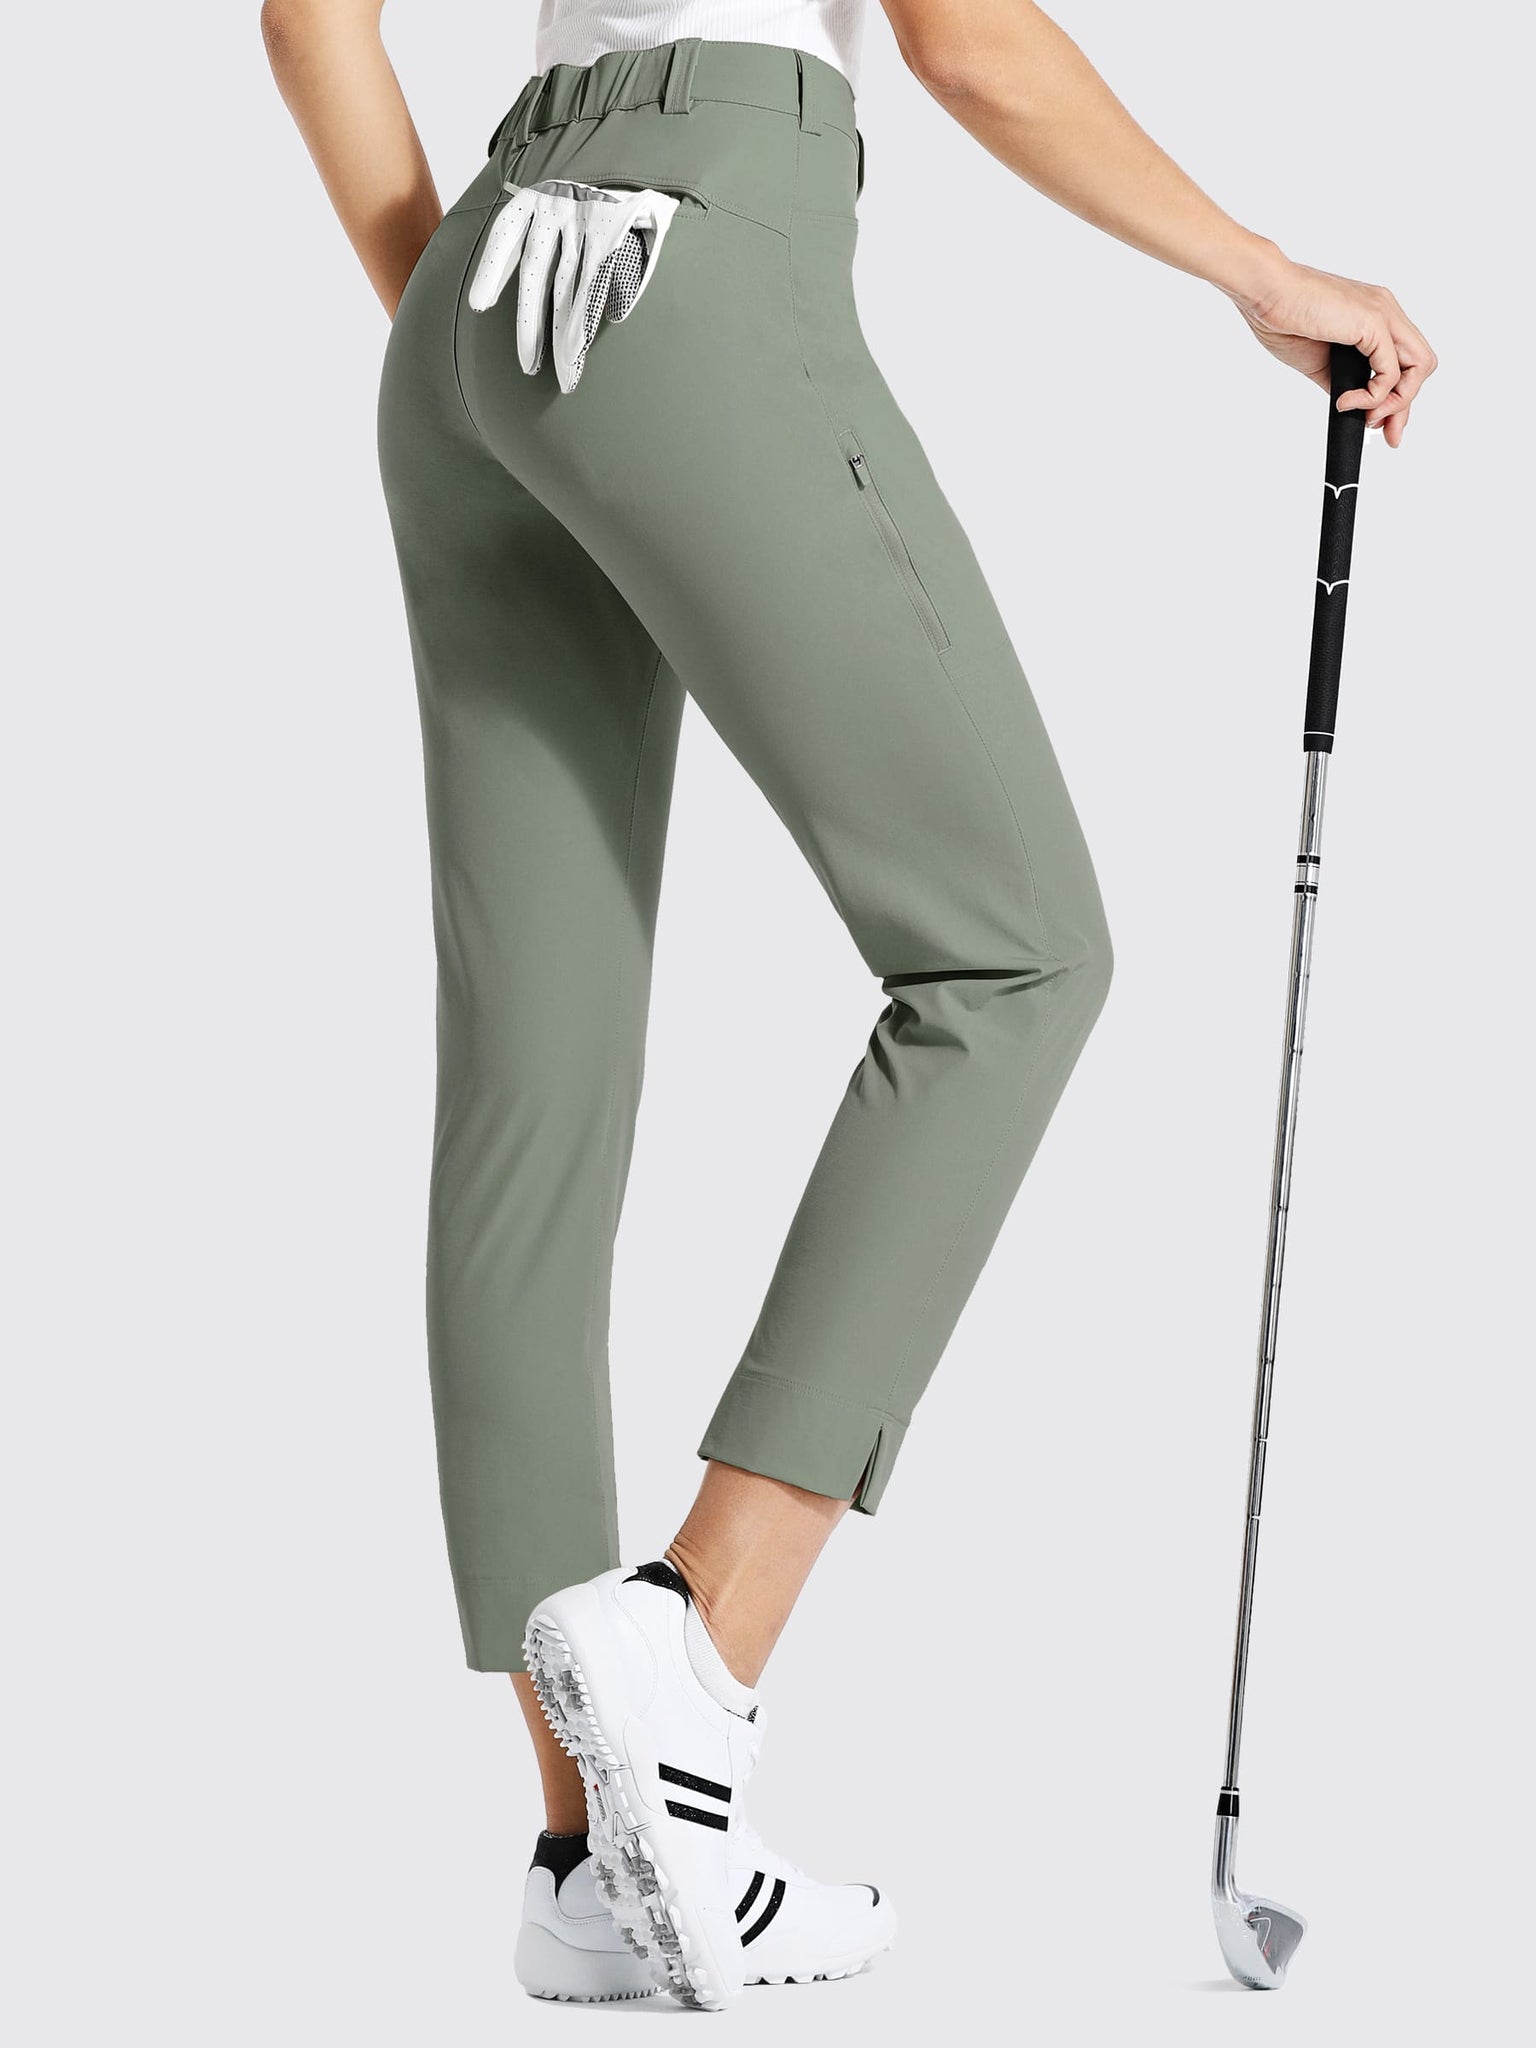 Women's Performance Golf Pants Dree Pants_SageGreen1